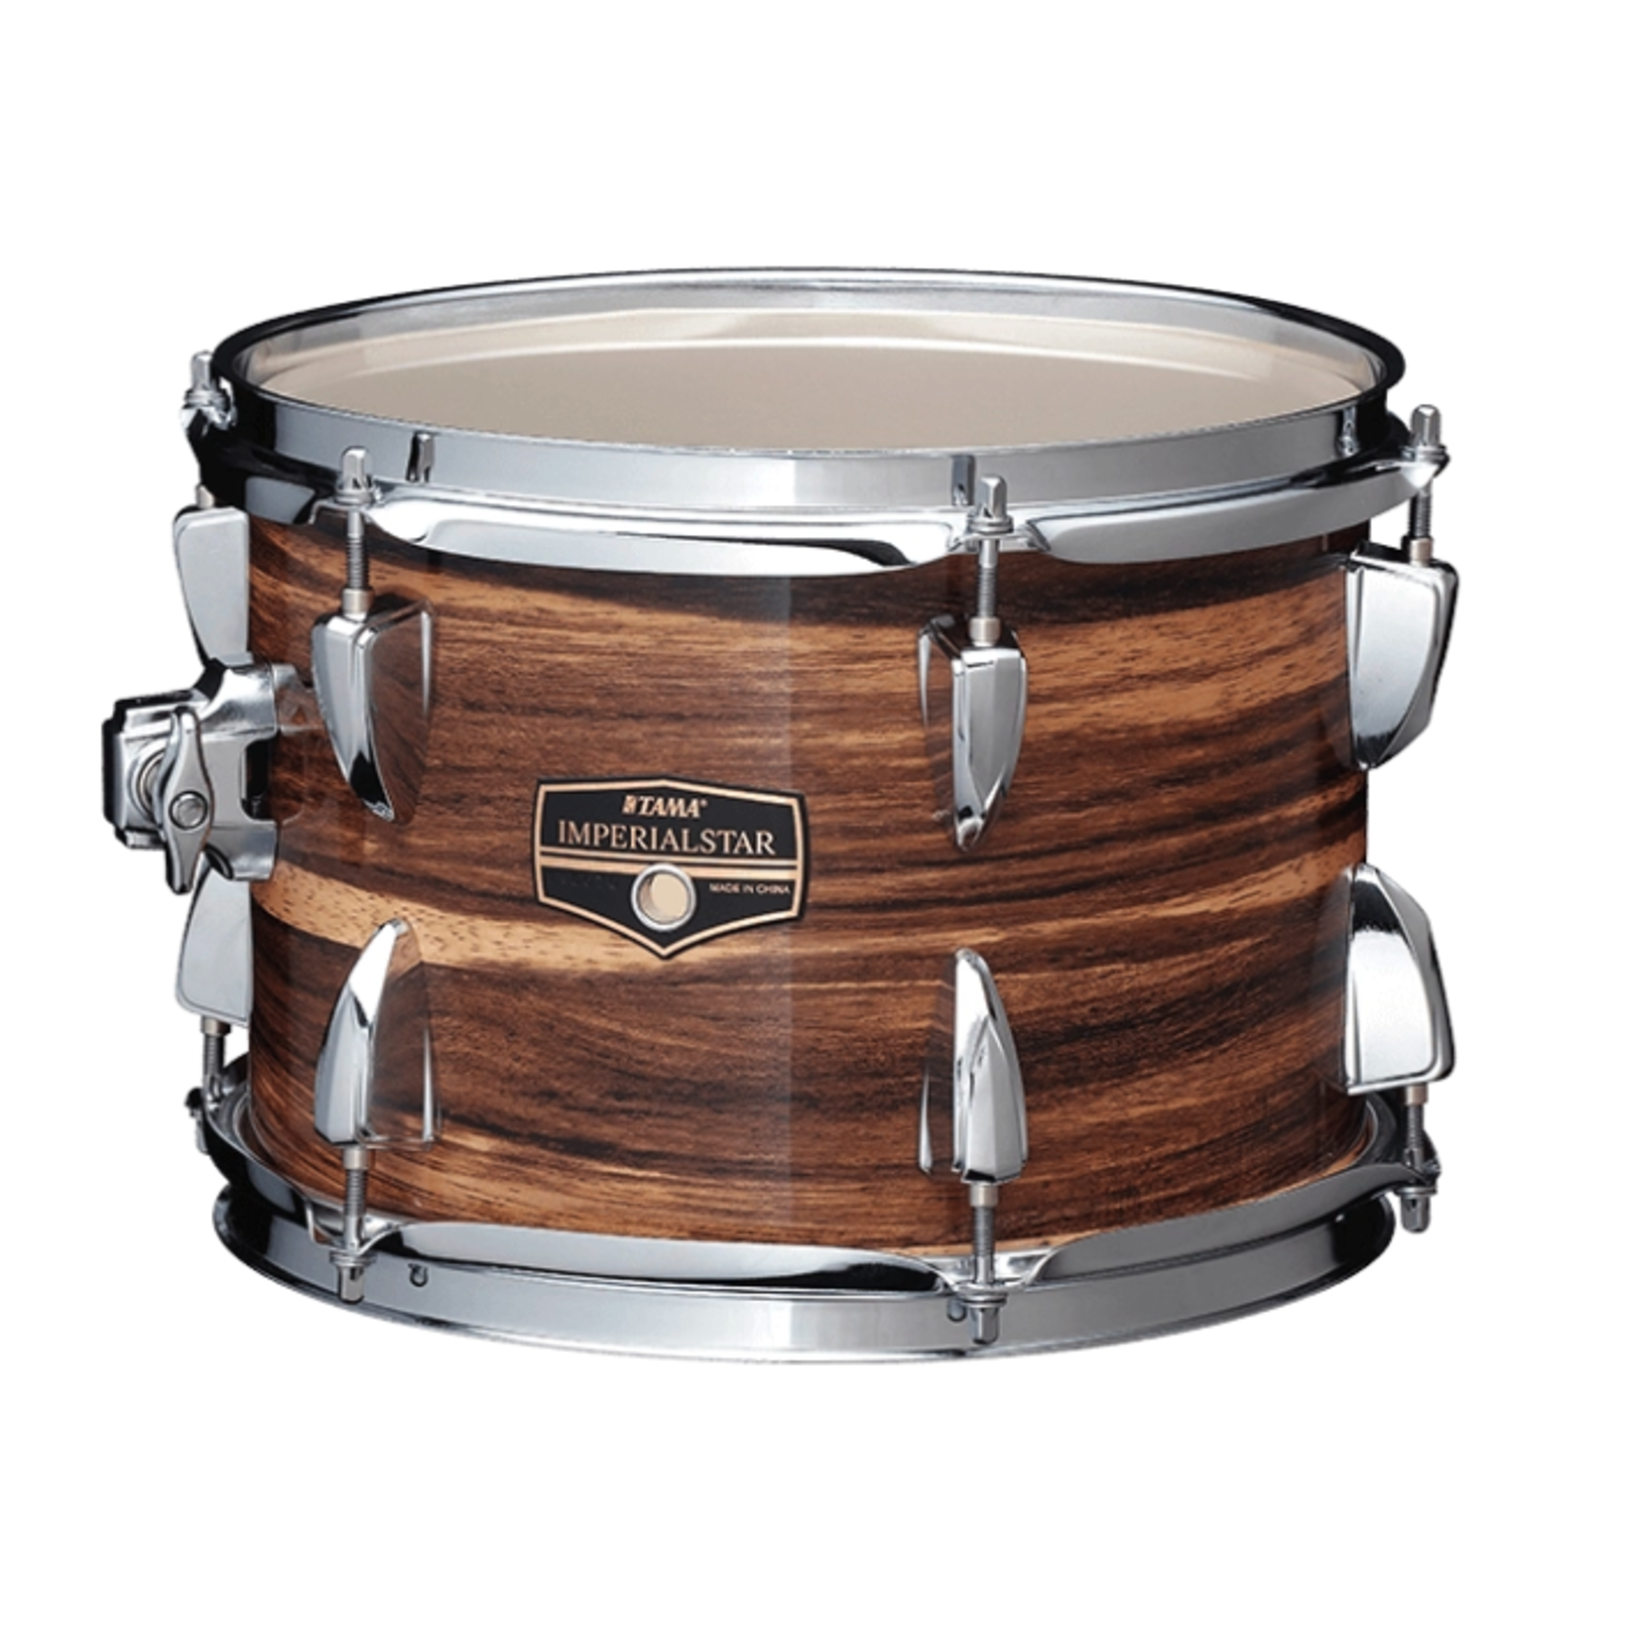 Tama Imperialstar IE52C 5-piece Complete Drum Set - Coffee Teak Wrap